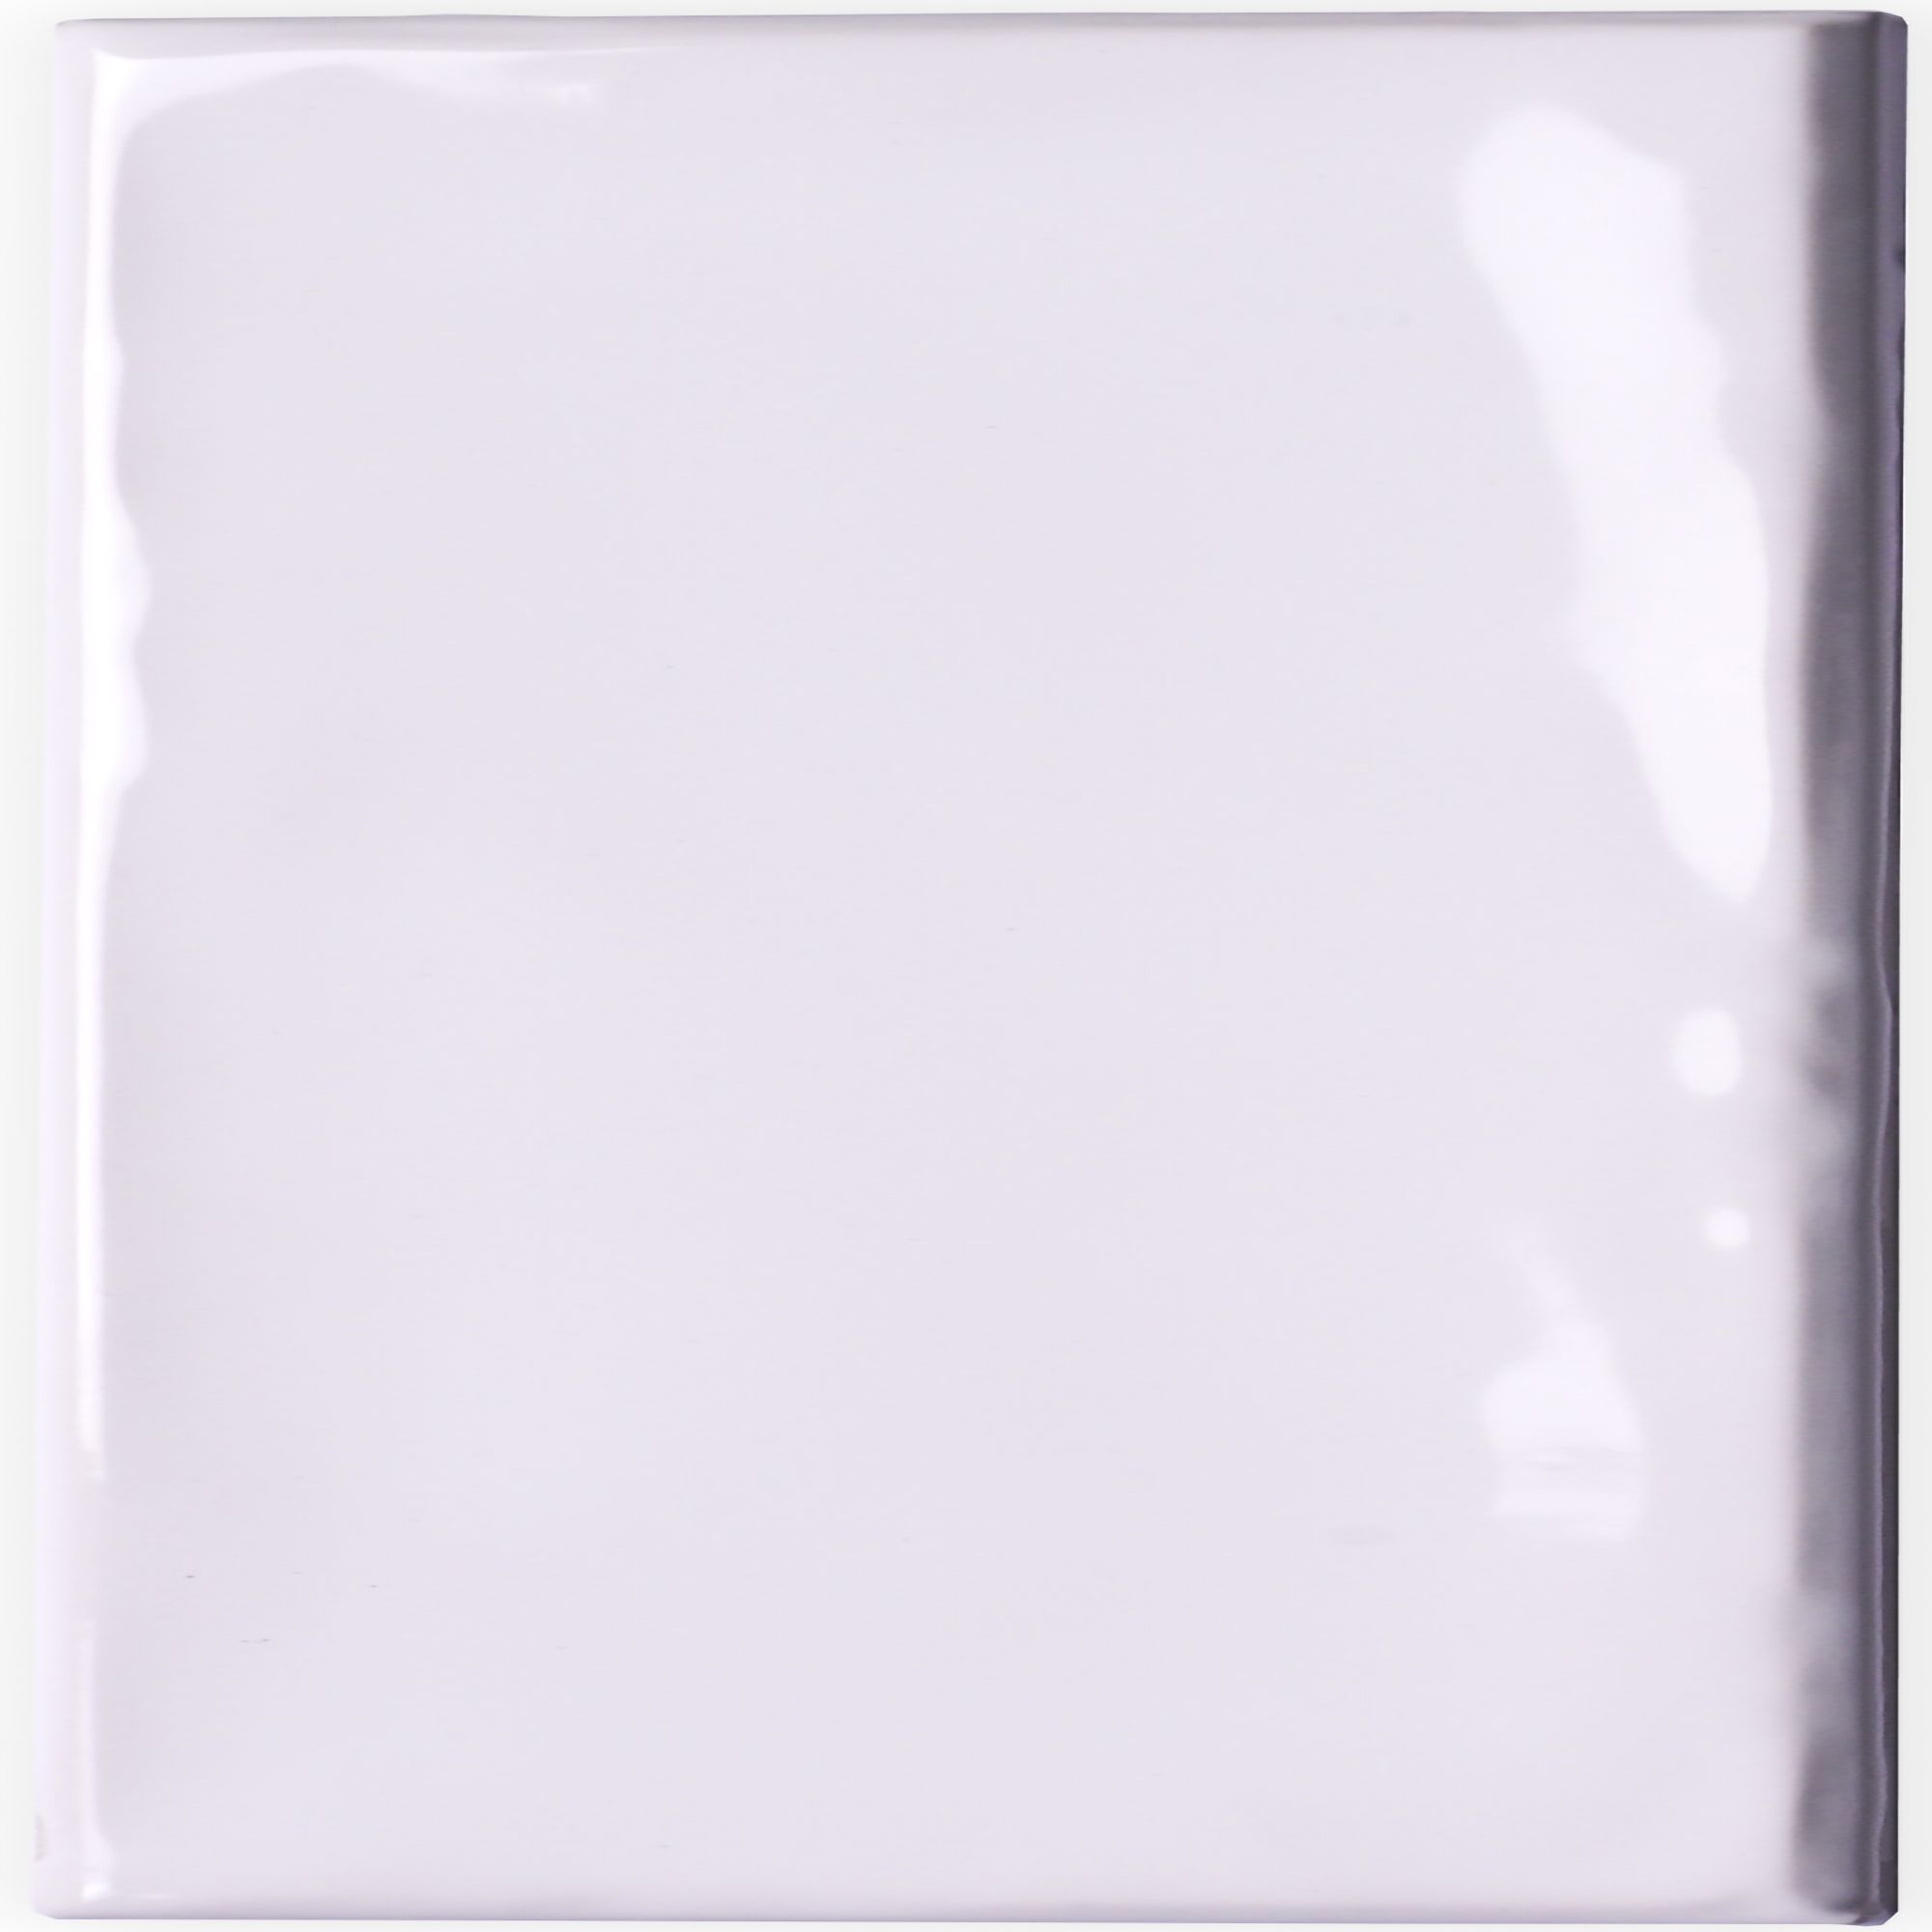 Iris White Gloss Ceramic Wall Tile, Pack of 54, (L)245mm (W)75mm